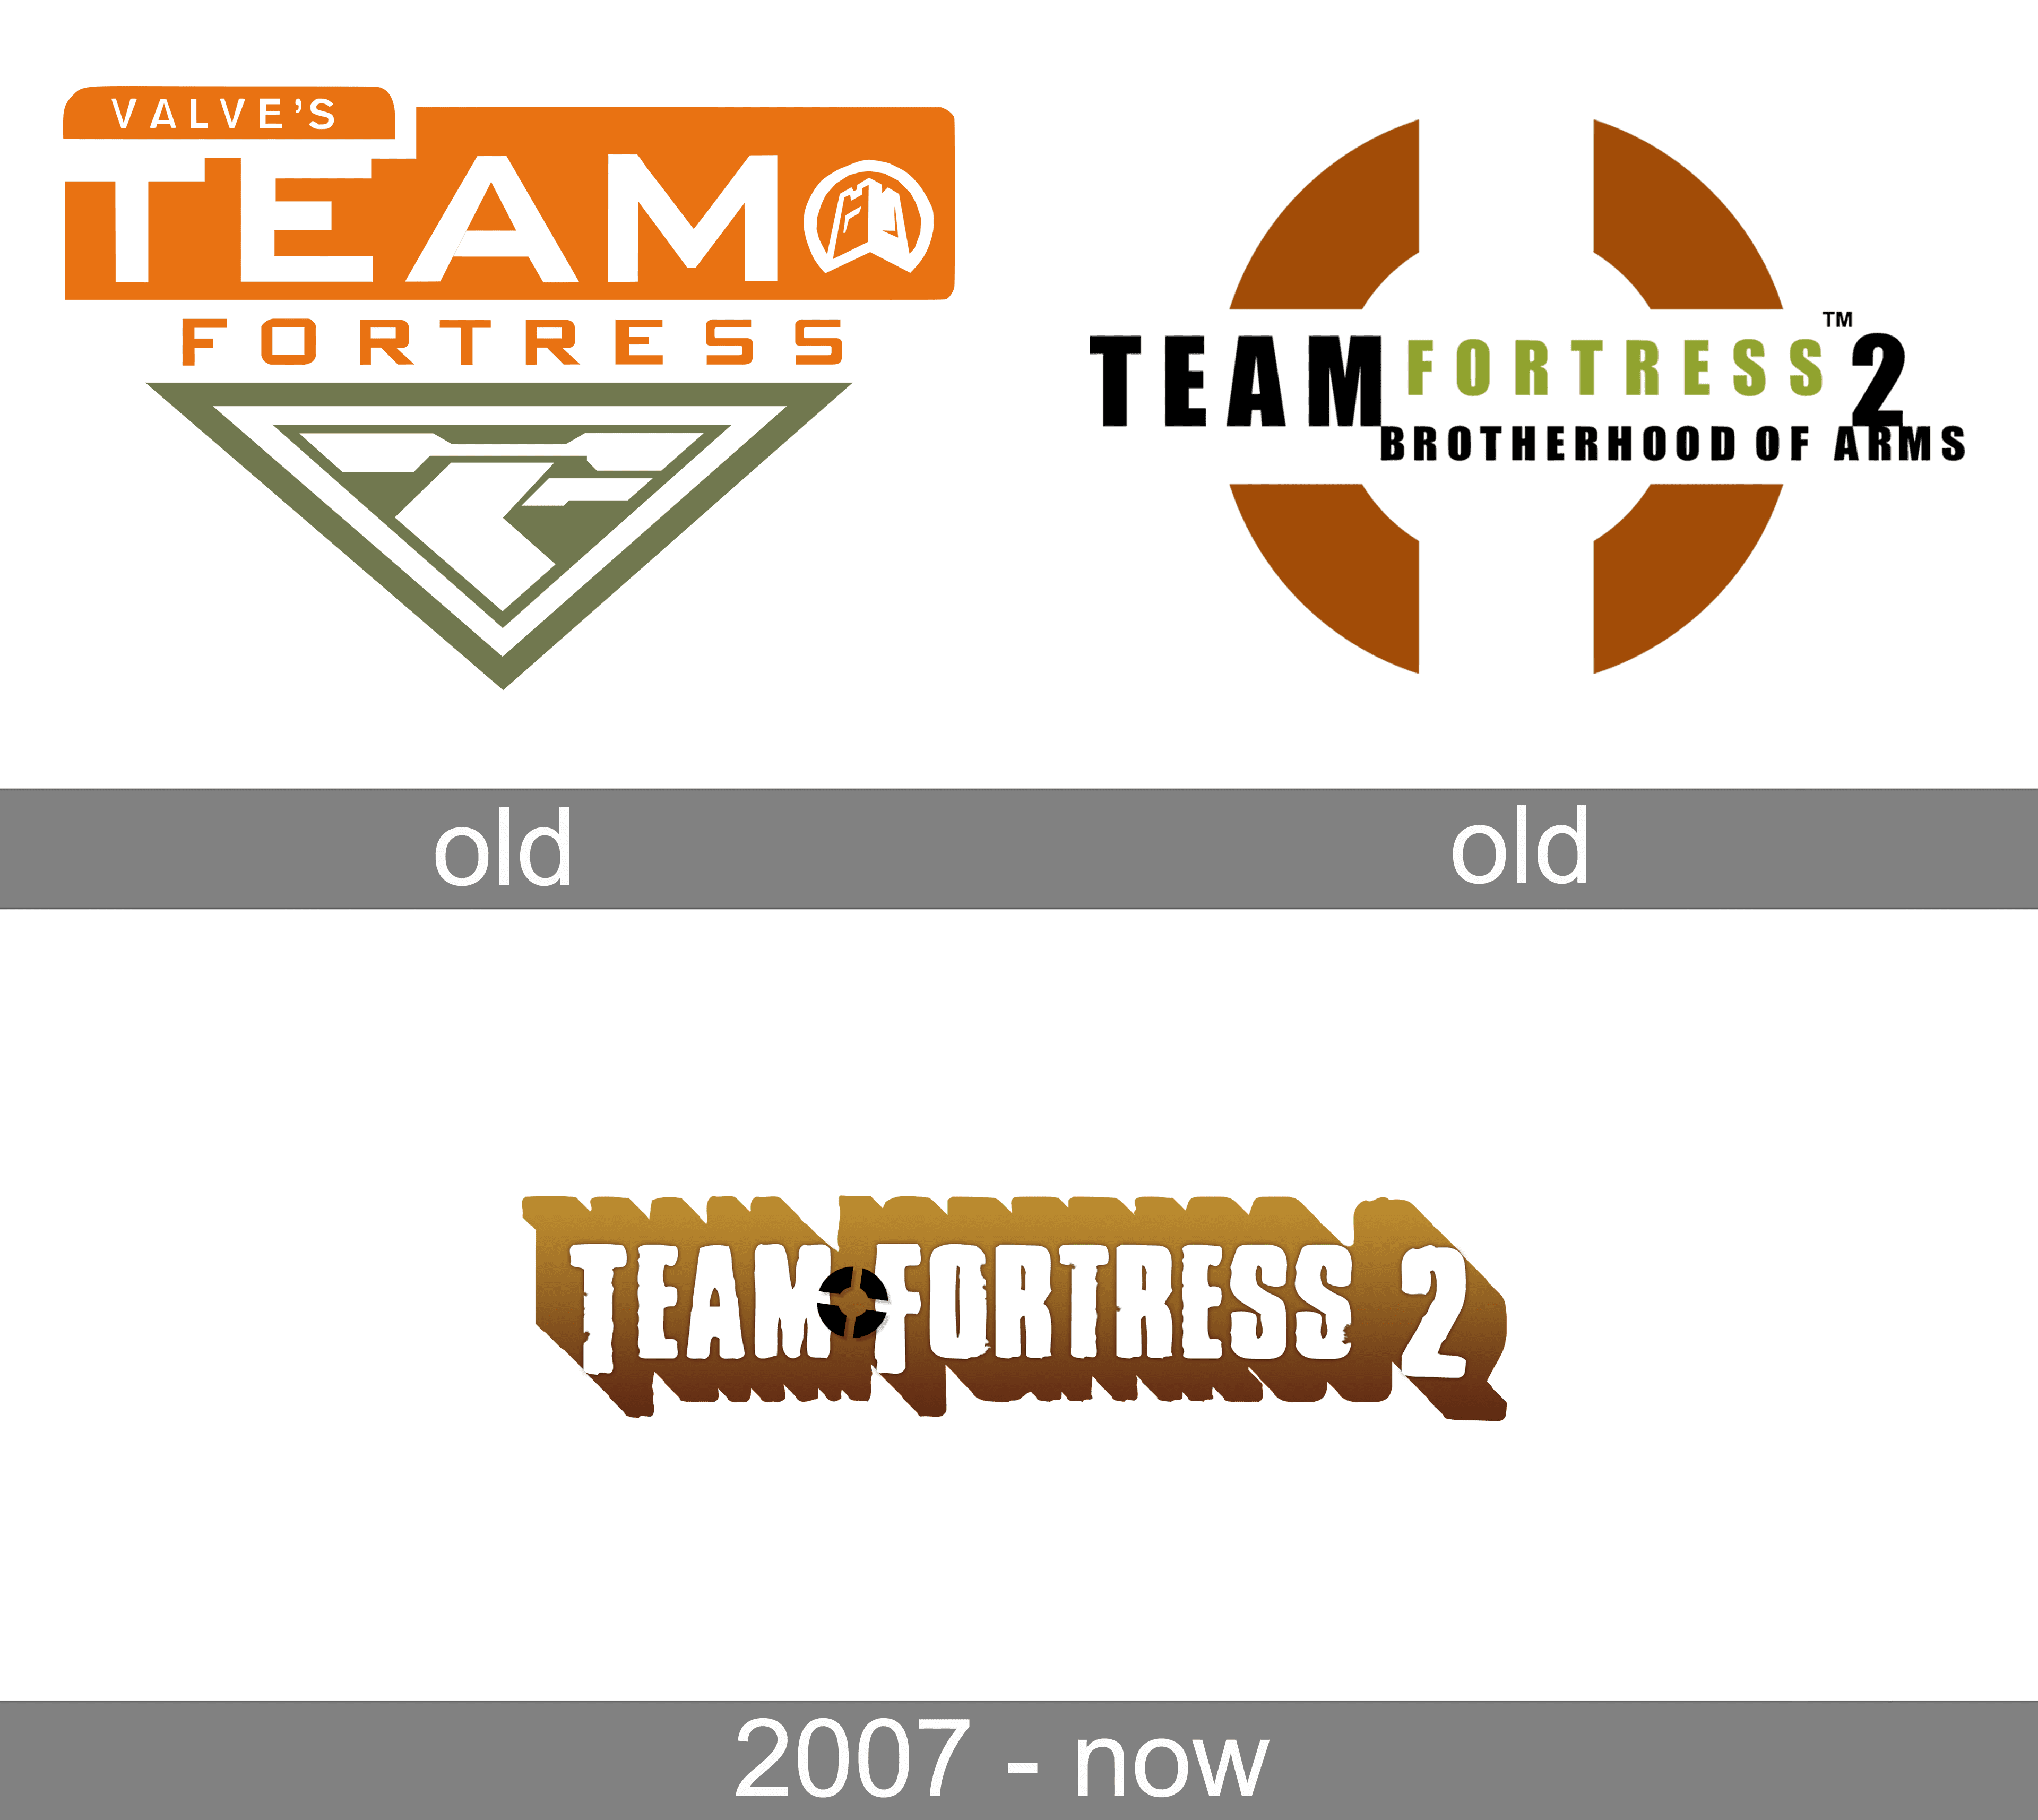 team fortress 2 logo tutorial